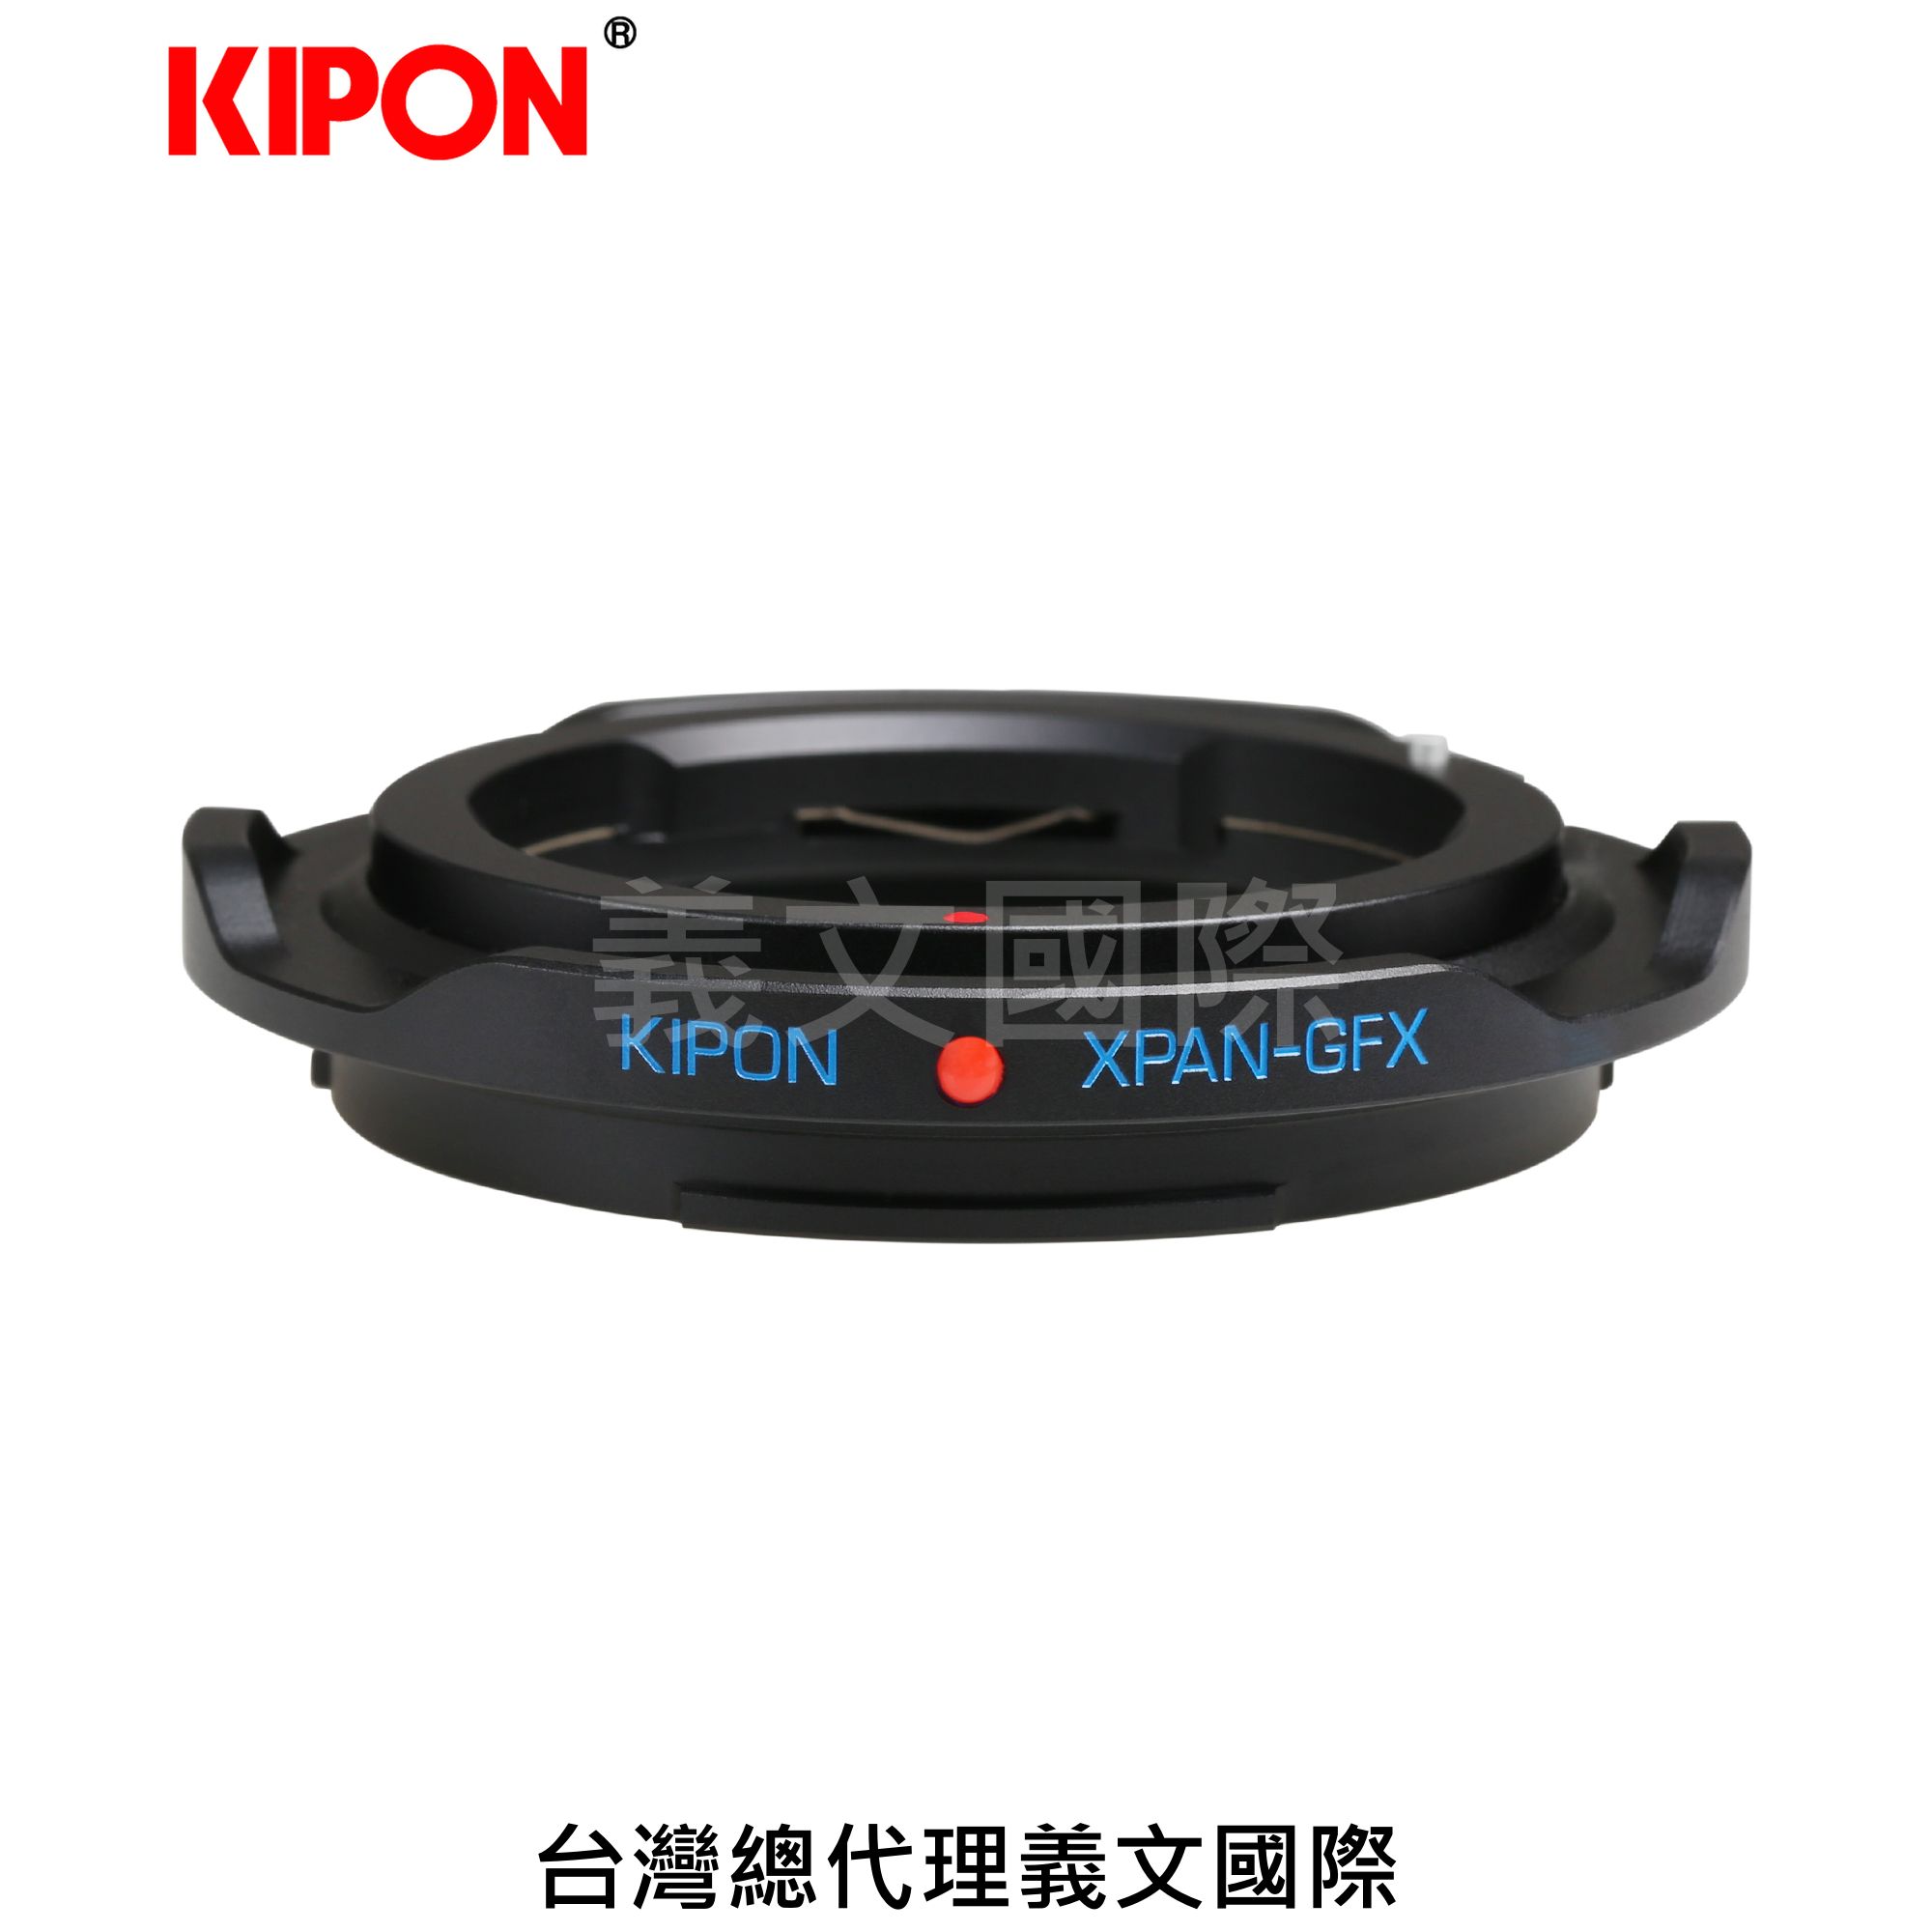 Kipon轉接環專賣店:HB XPAN-GFX(Fuji,富士,哈蘇,Hasselbad,GFX100,GFX50S,GFX50R)